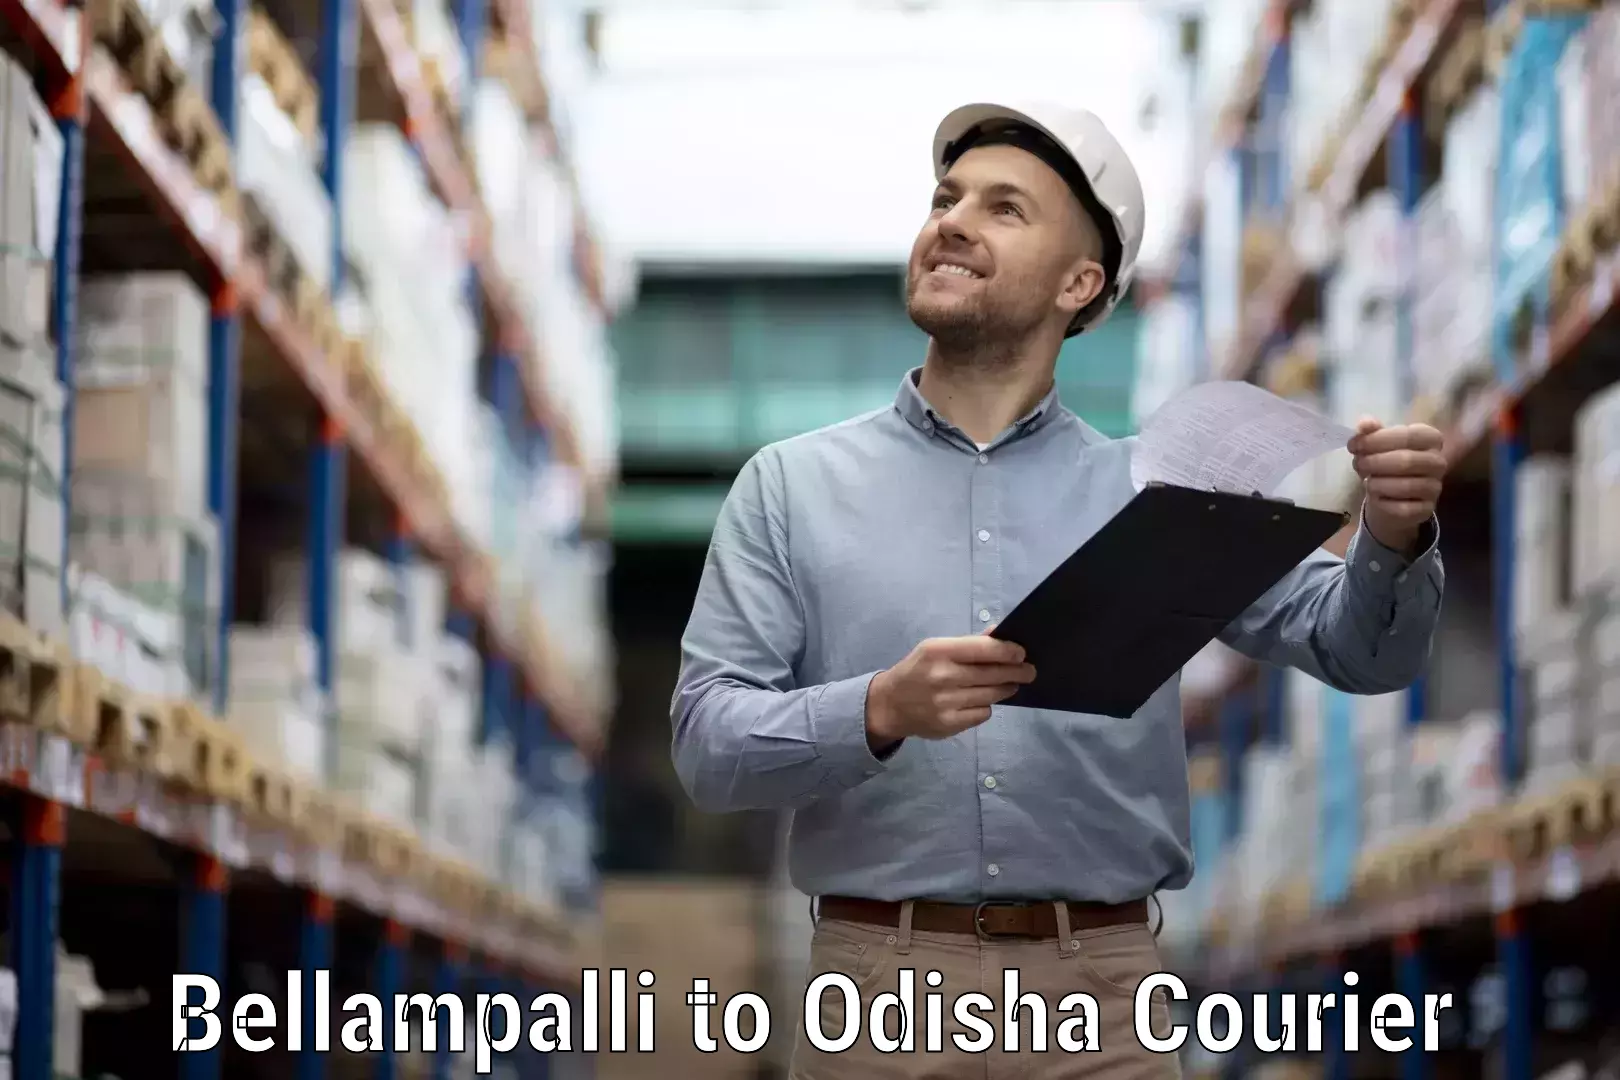 Nationwide delivery network Bellampalli to Odisha